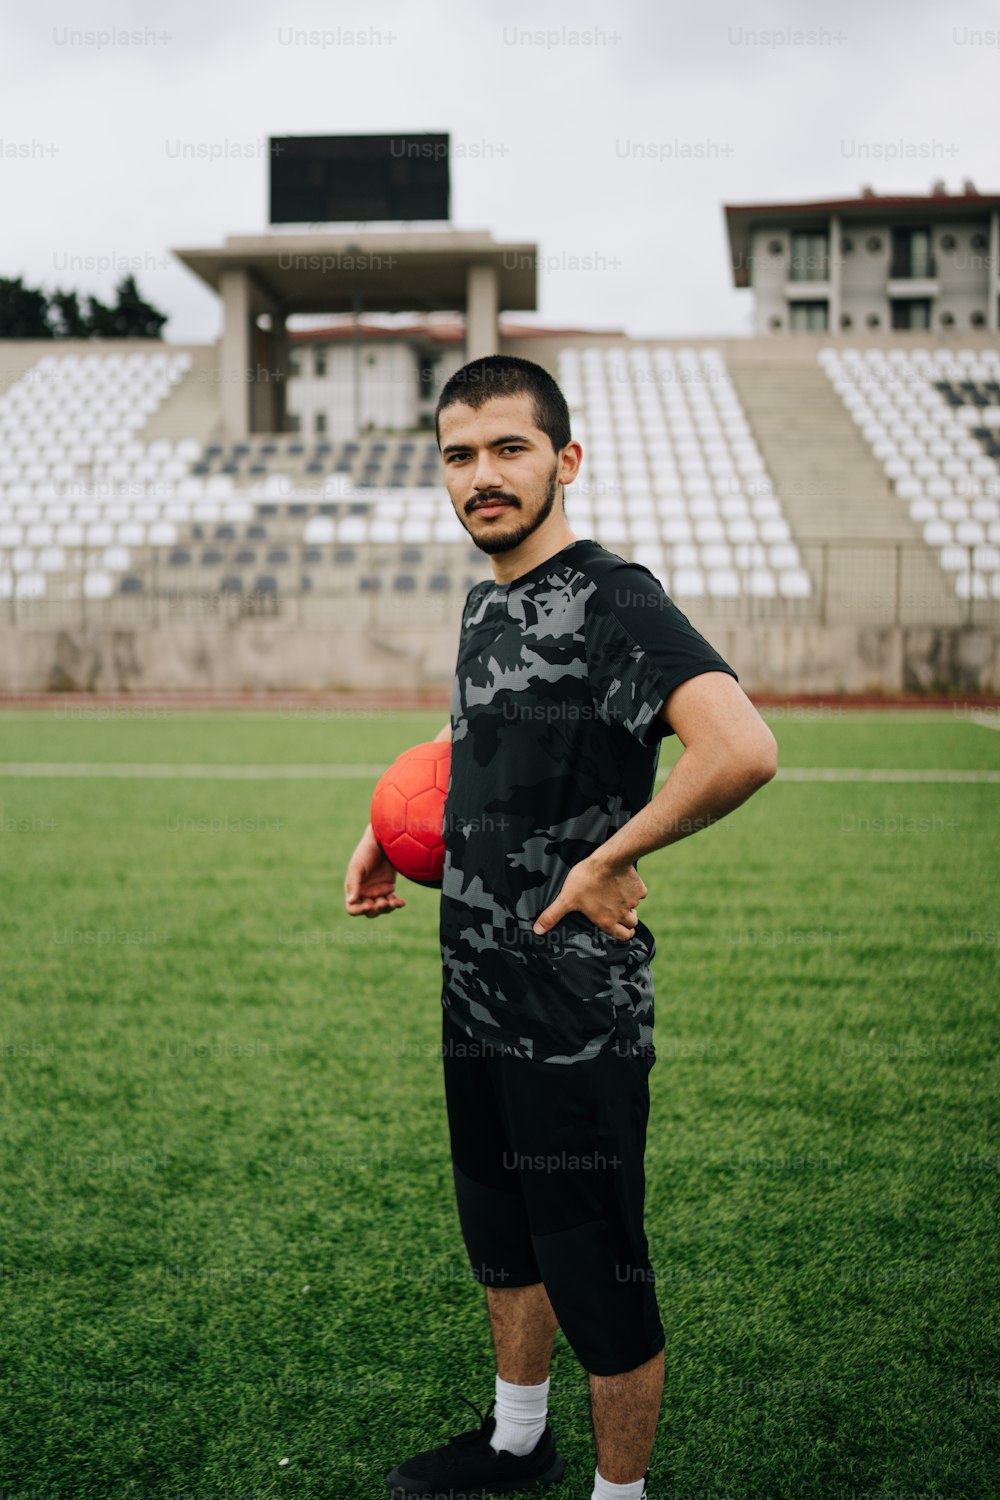 a man standing on a field holding a ball